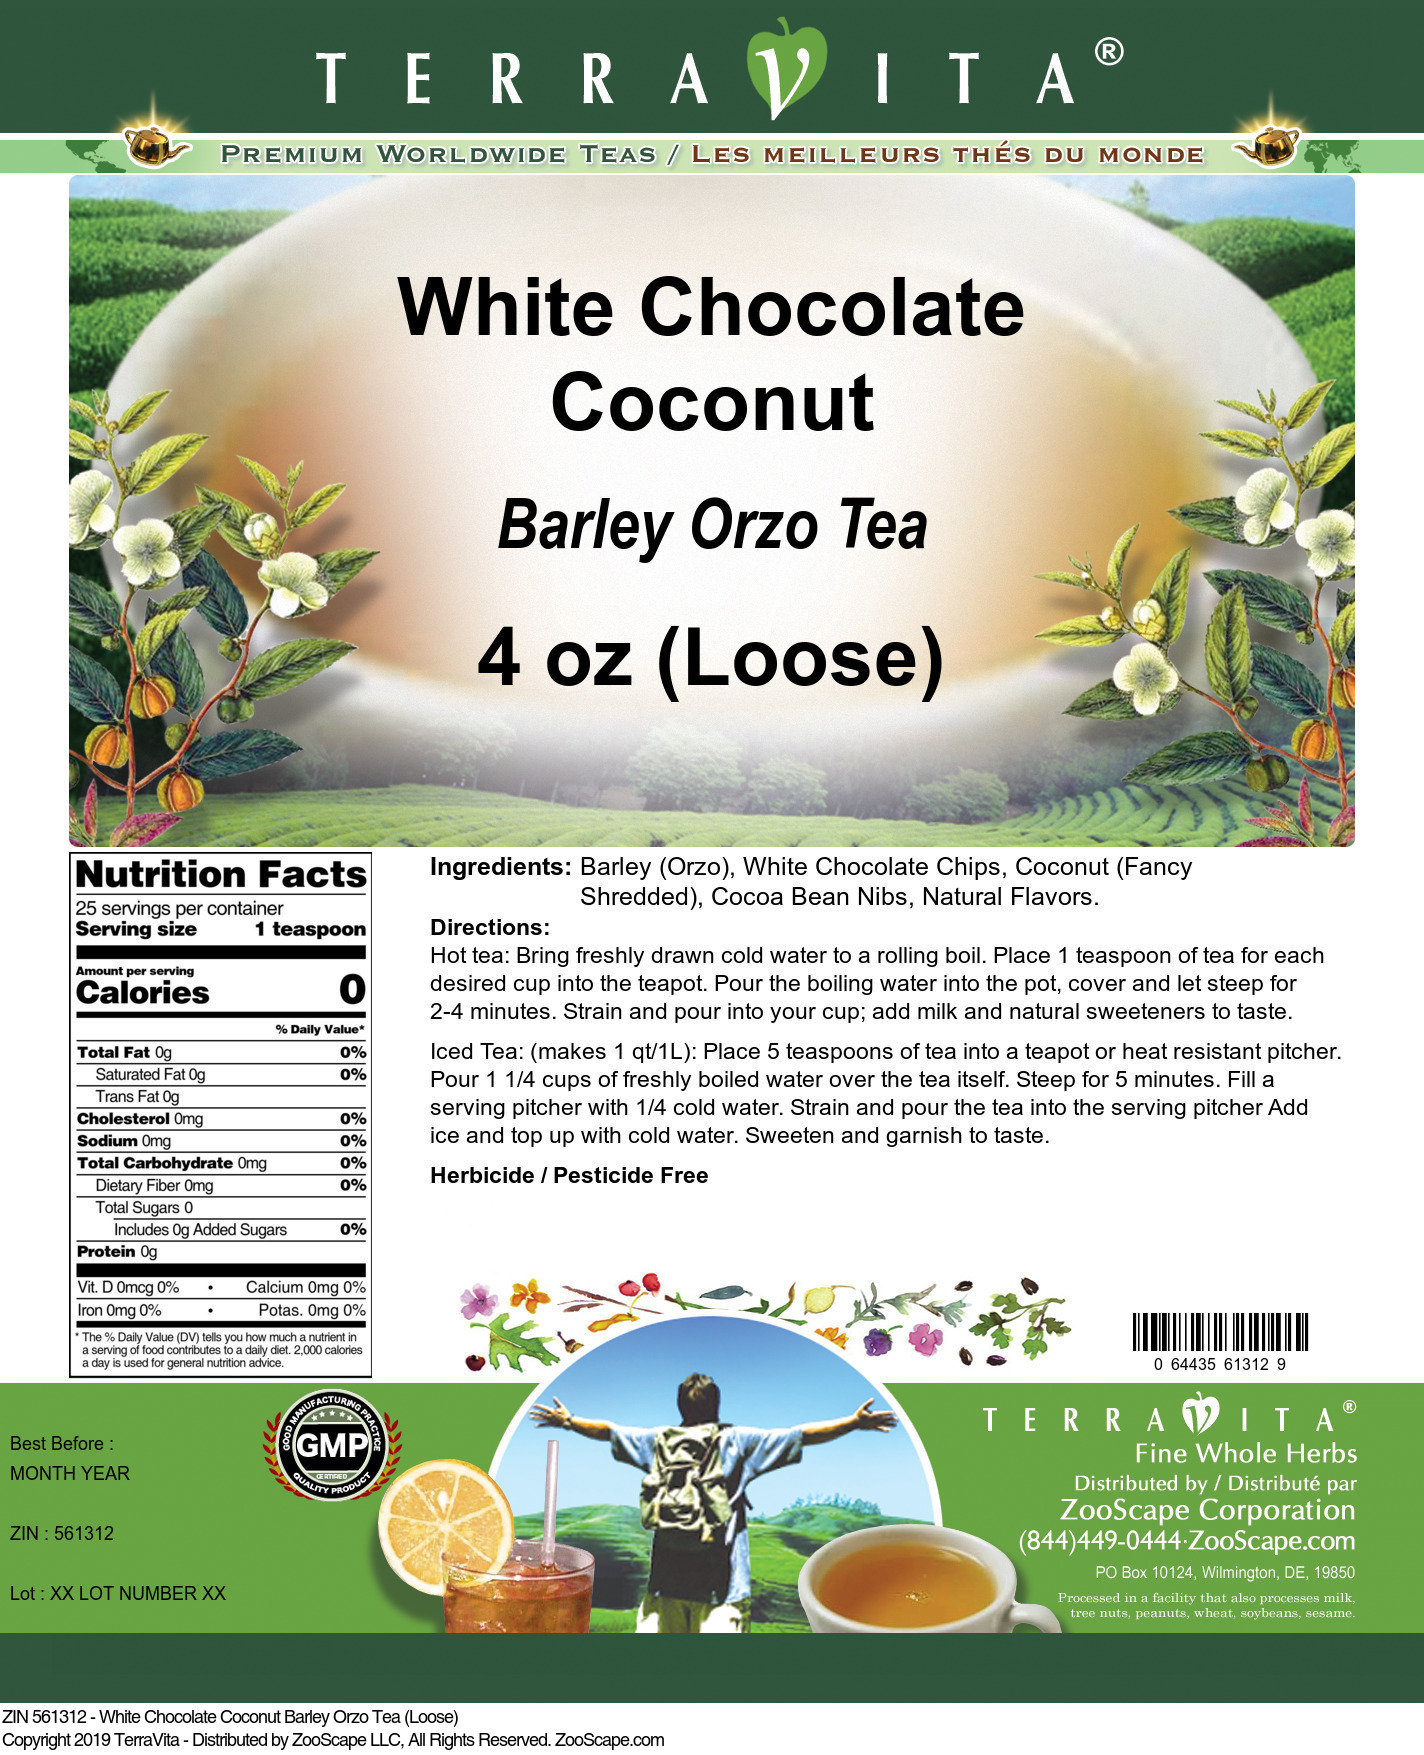 White Chocolate Coconut Barley Orzo Tea (Loose) - Label